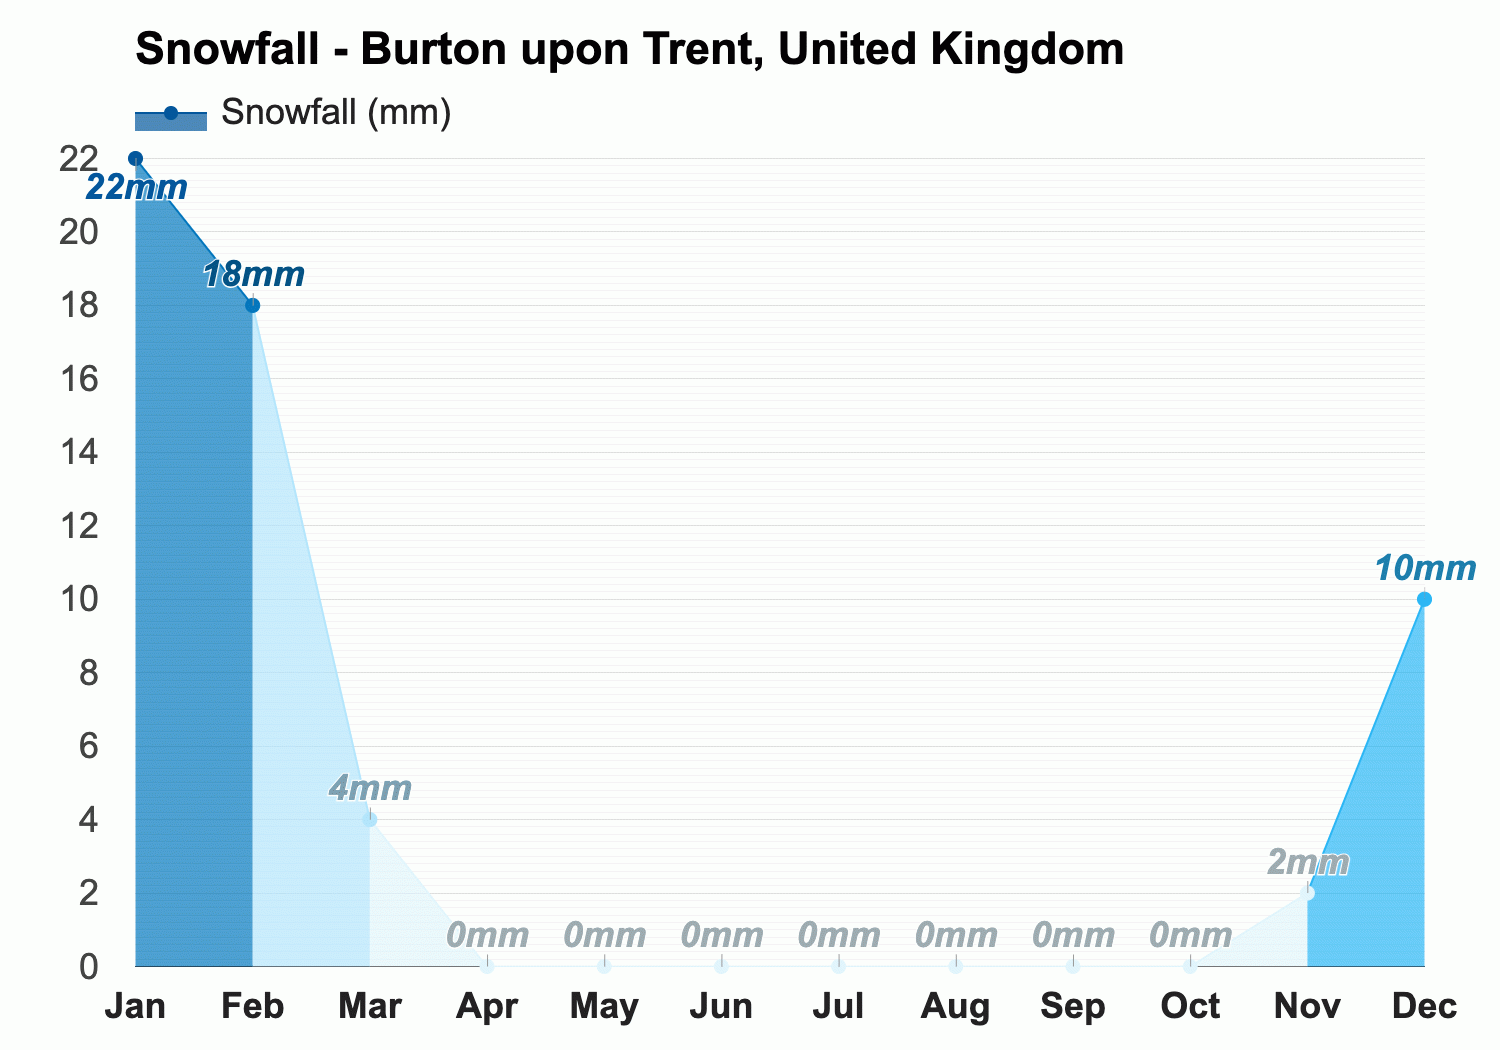 Burton upon Trent, United Kingdom - Climate & Monthly weather forecast